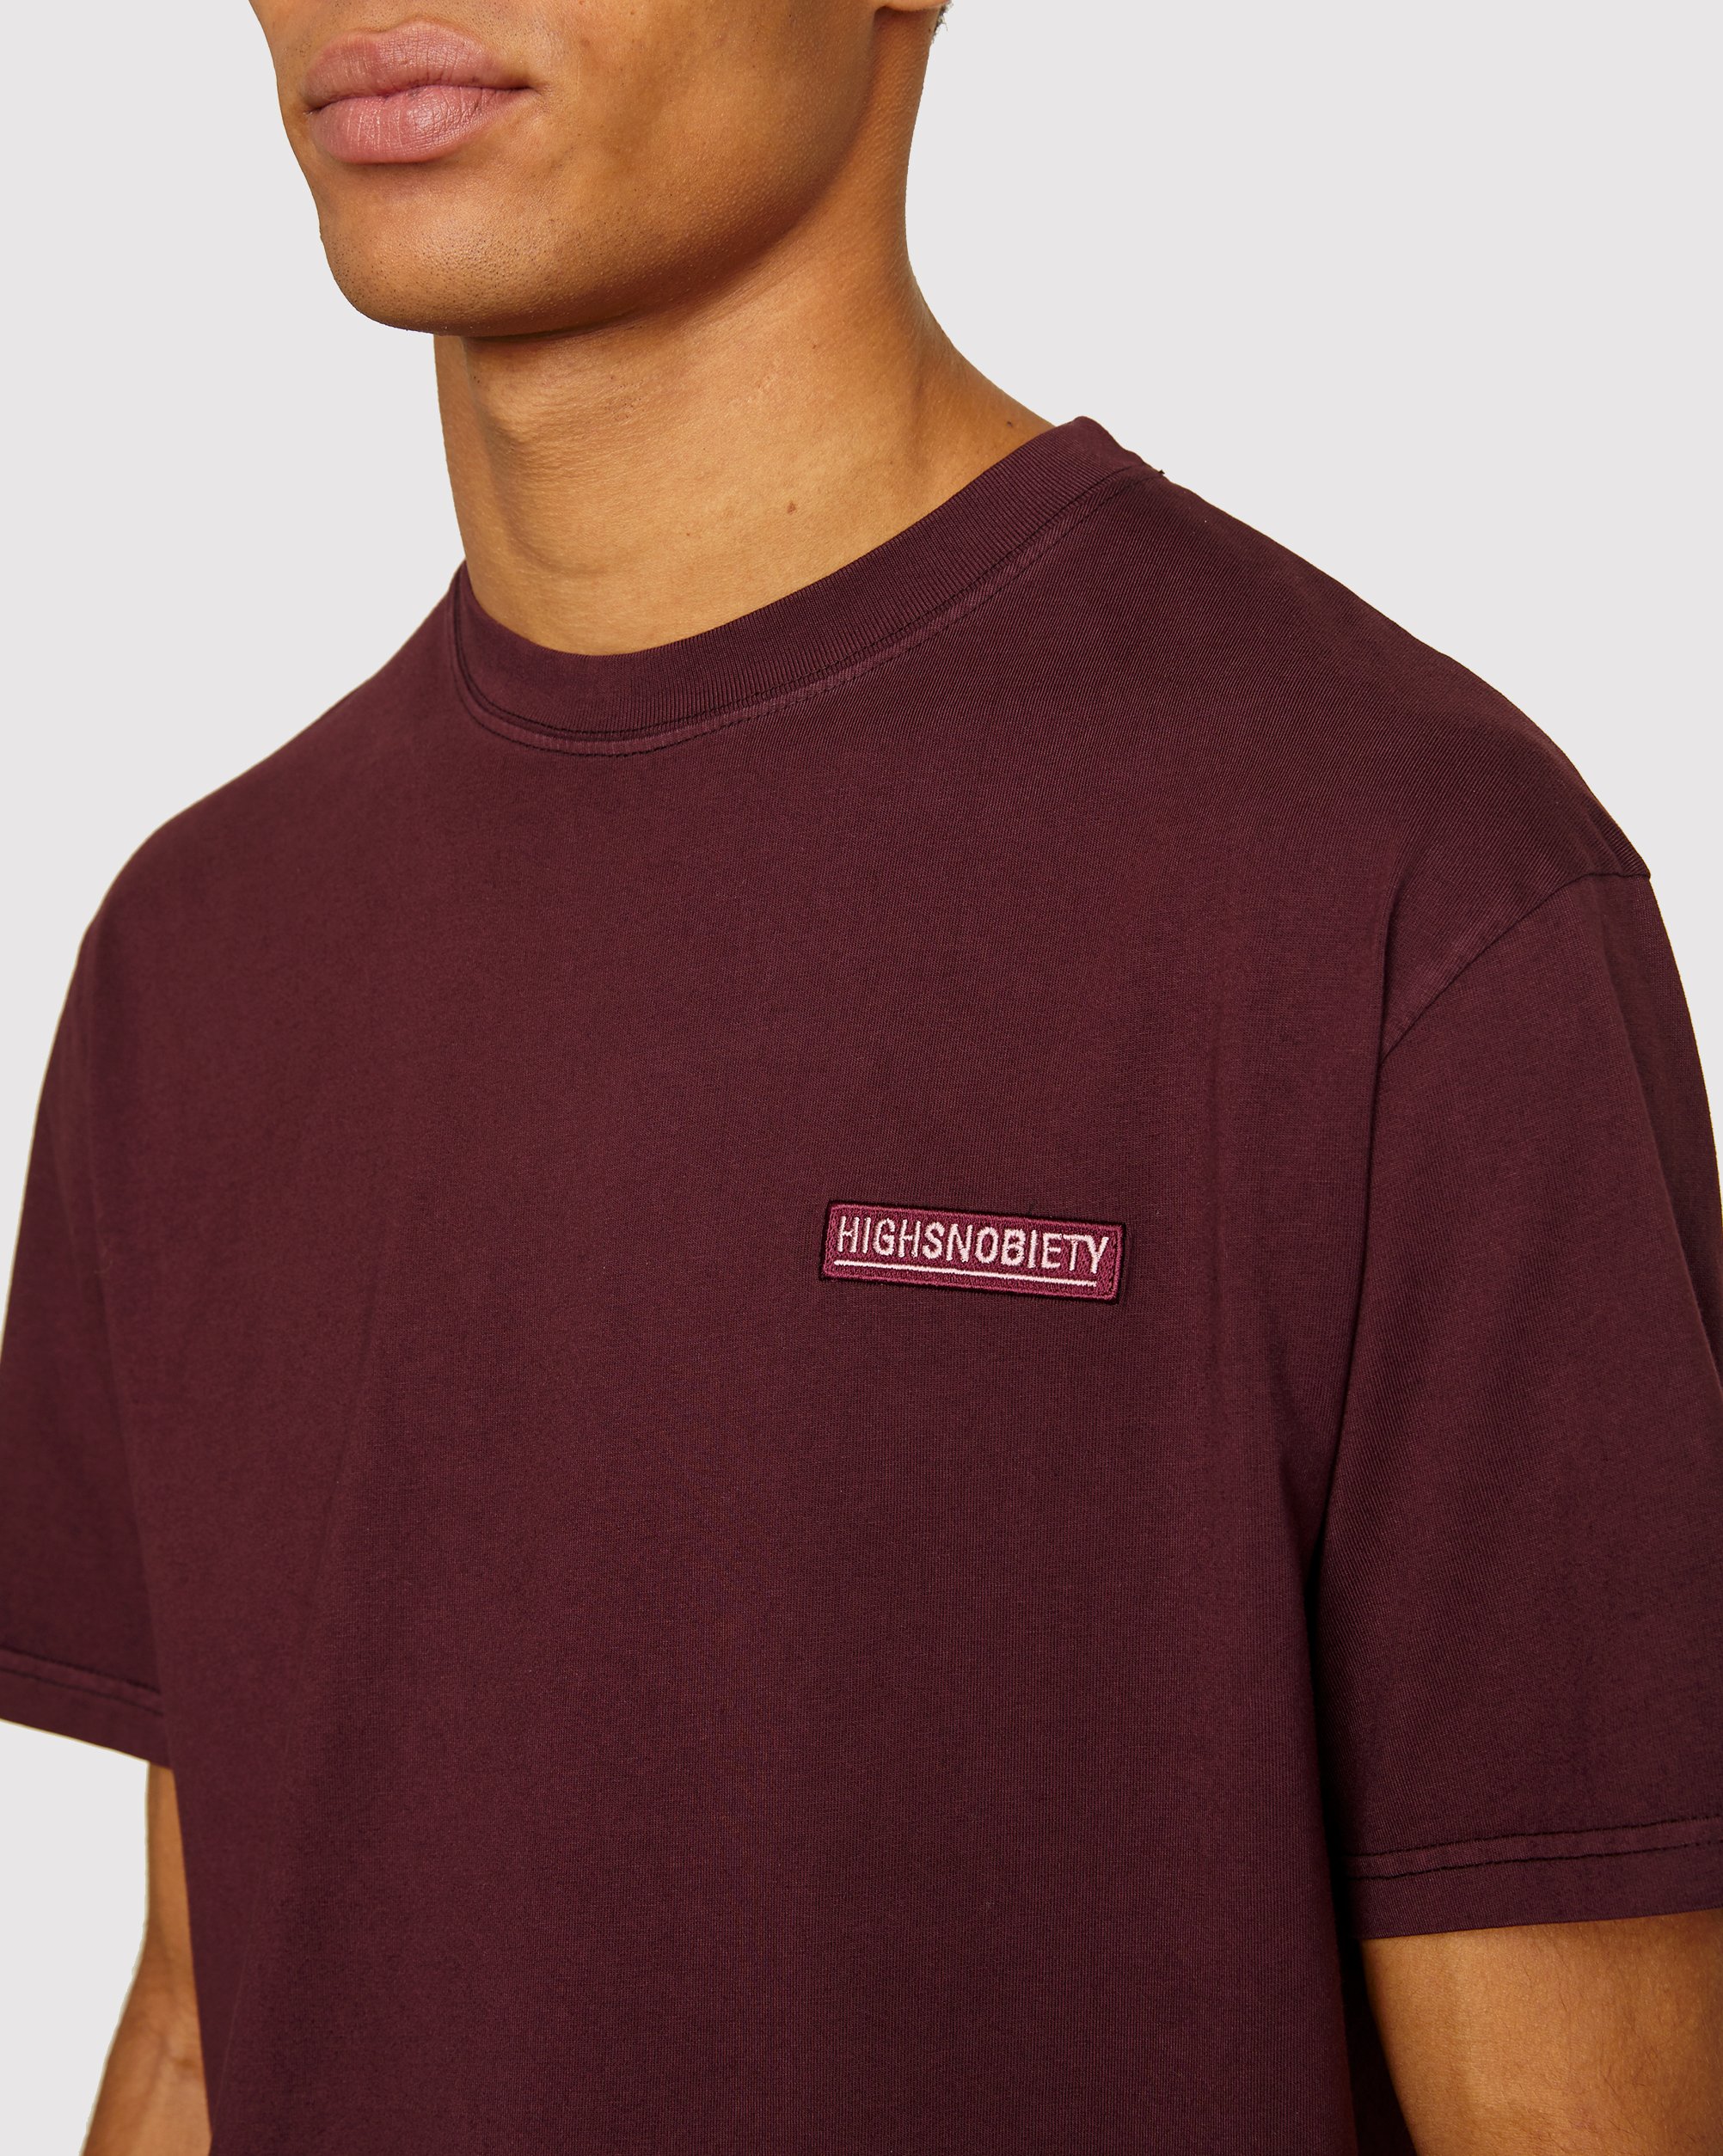 Highsnobiety - Staples T-Shirt Burgundy - Clothing - Red - Image 5